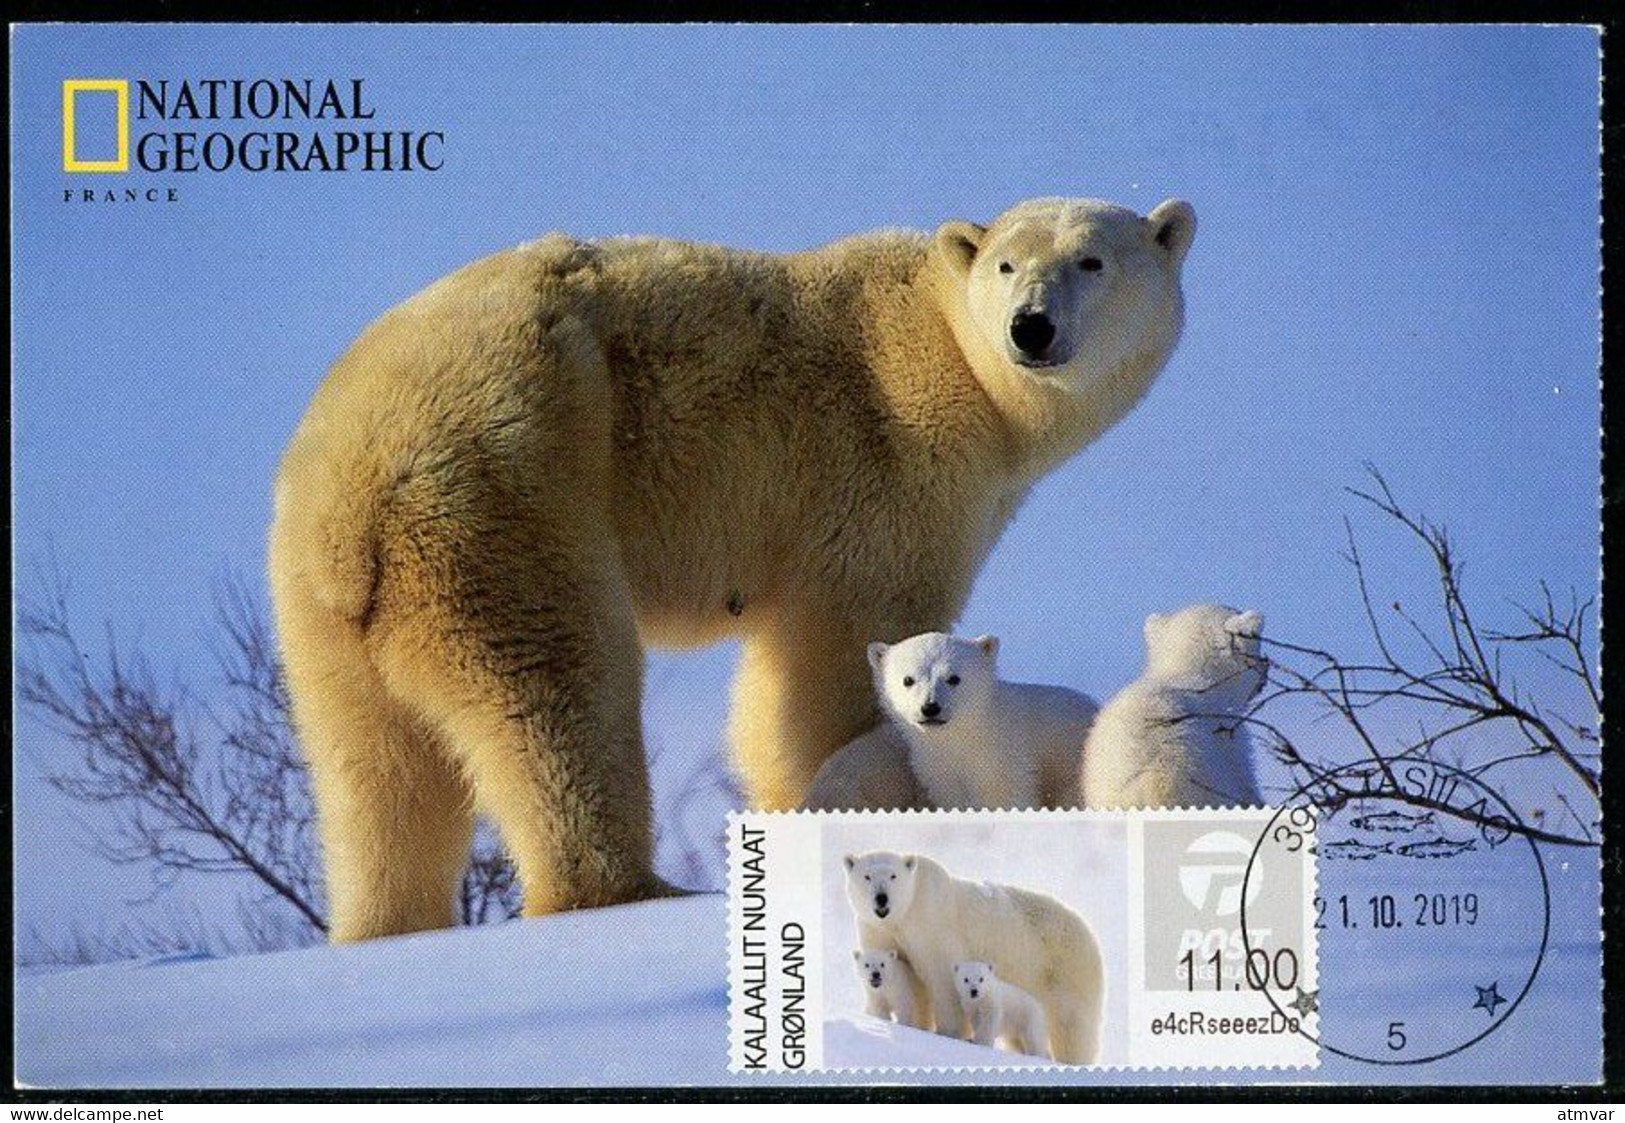 GREENLAND GROENLAND (2019) - Carte Maximum Card ATM - Polar Bear, Der Eisbär, Ours Blanc (National Geographic) - Cartes-Maximum (CM)